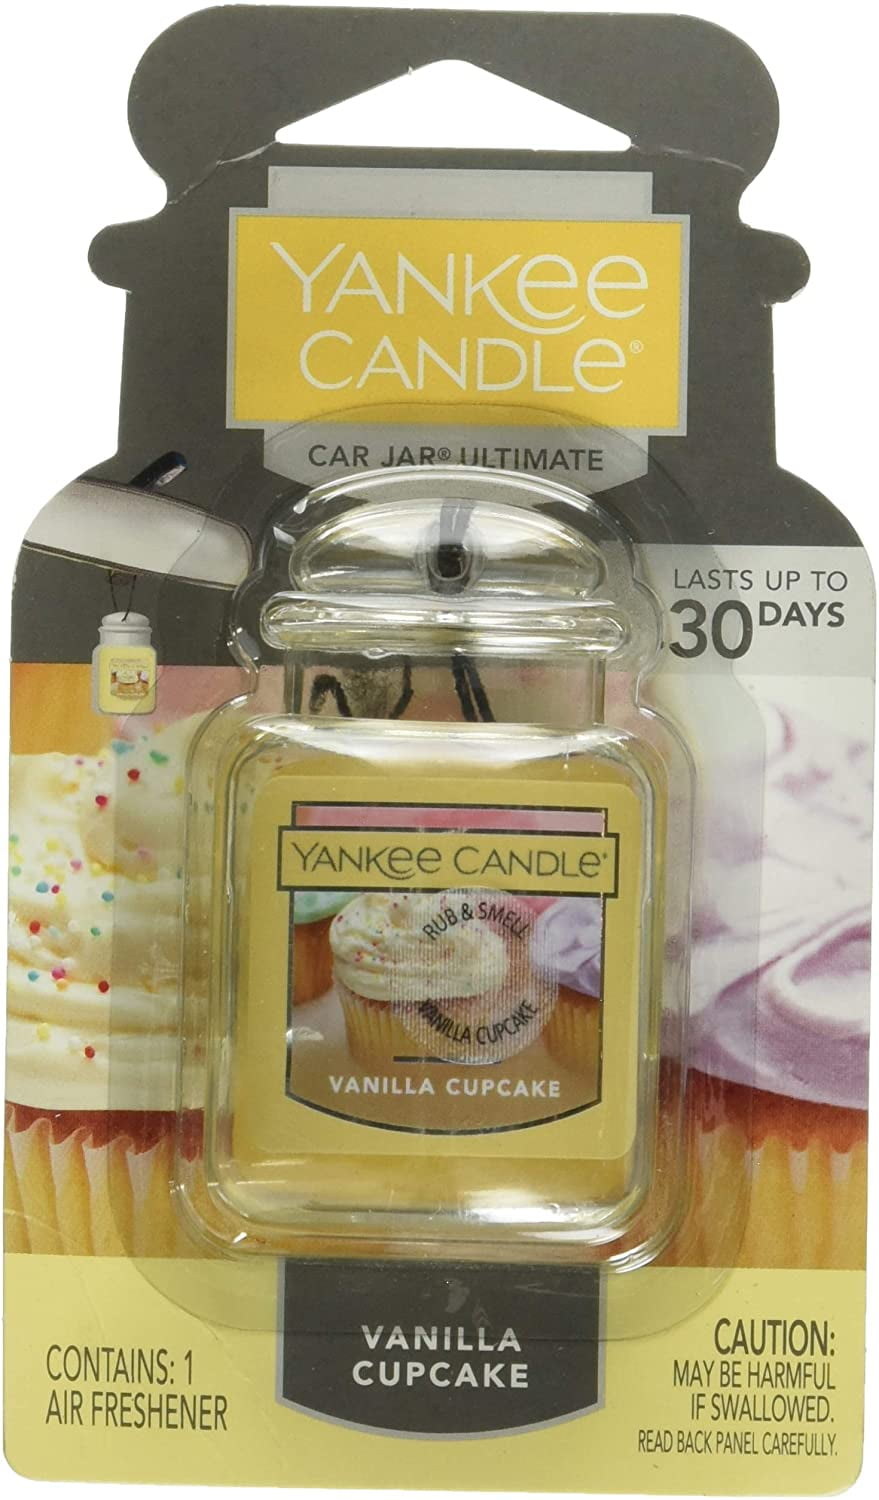 YANKEE CANDLE Vanilla Cupcake Car Jar Ultimate